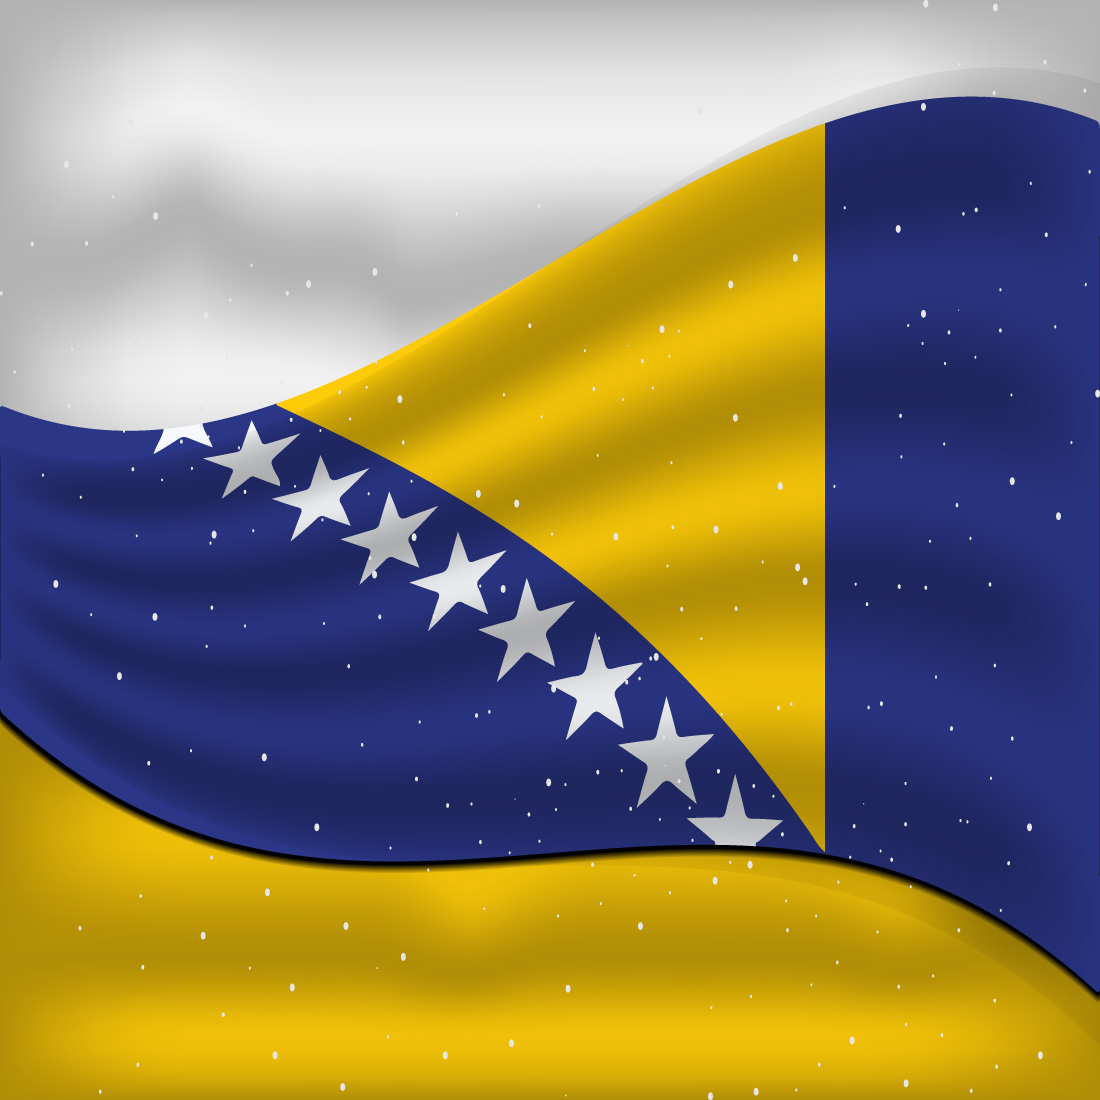 Wonderful image of the flag of Bosnia.